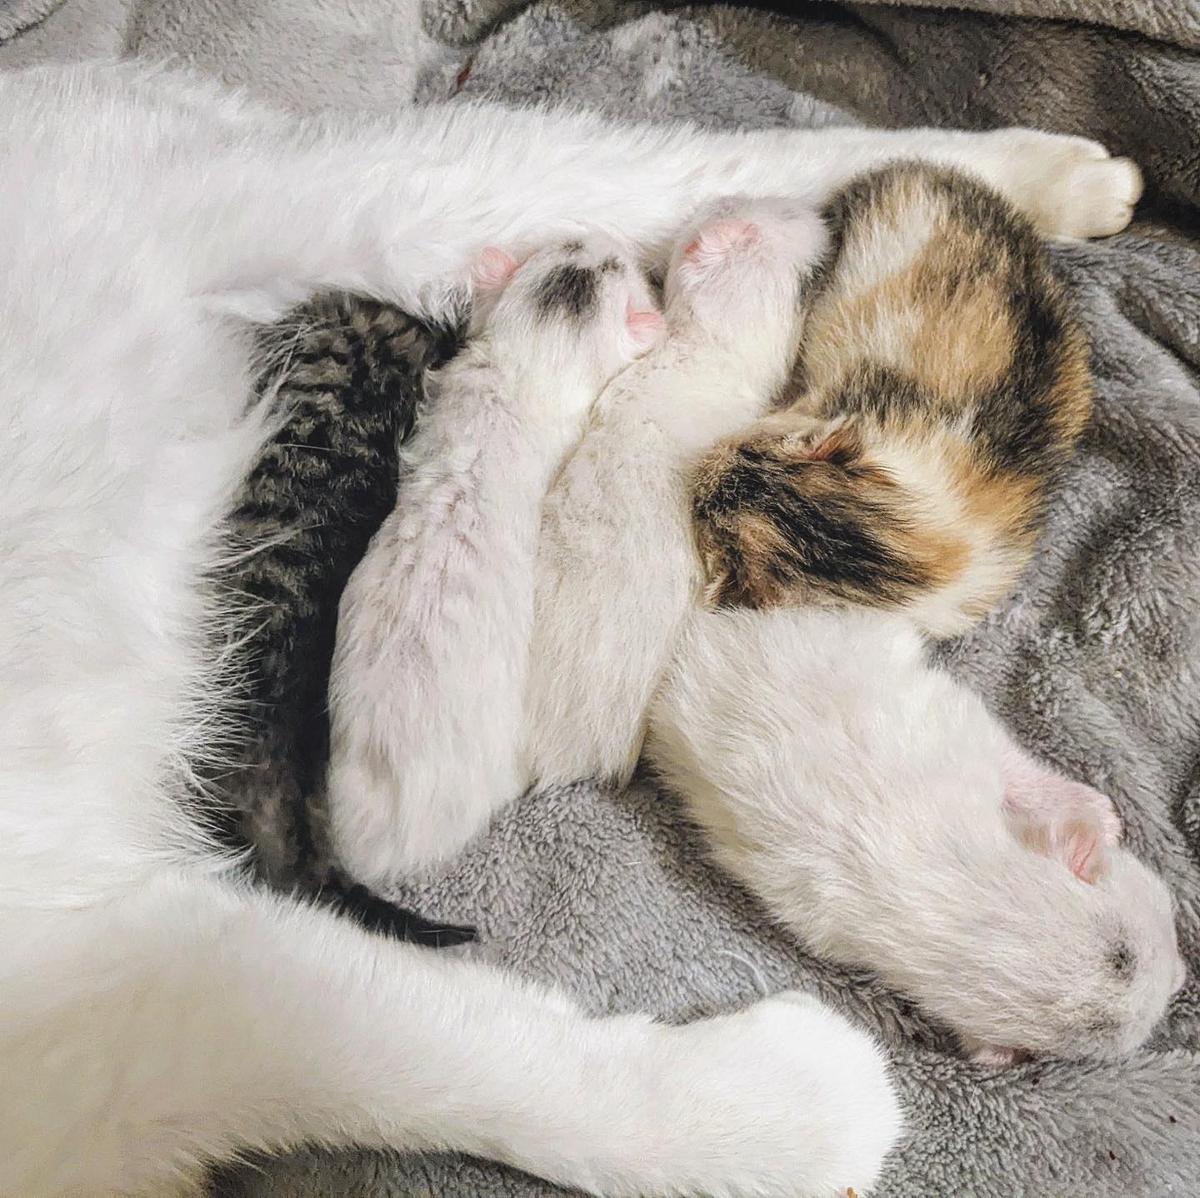 (Courtesy of Sarah Kelly, <a href="https://www.instagram.com/kellyfosterkittens/">Kelly Foster Kittens</a>)